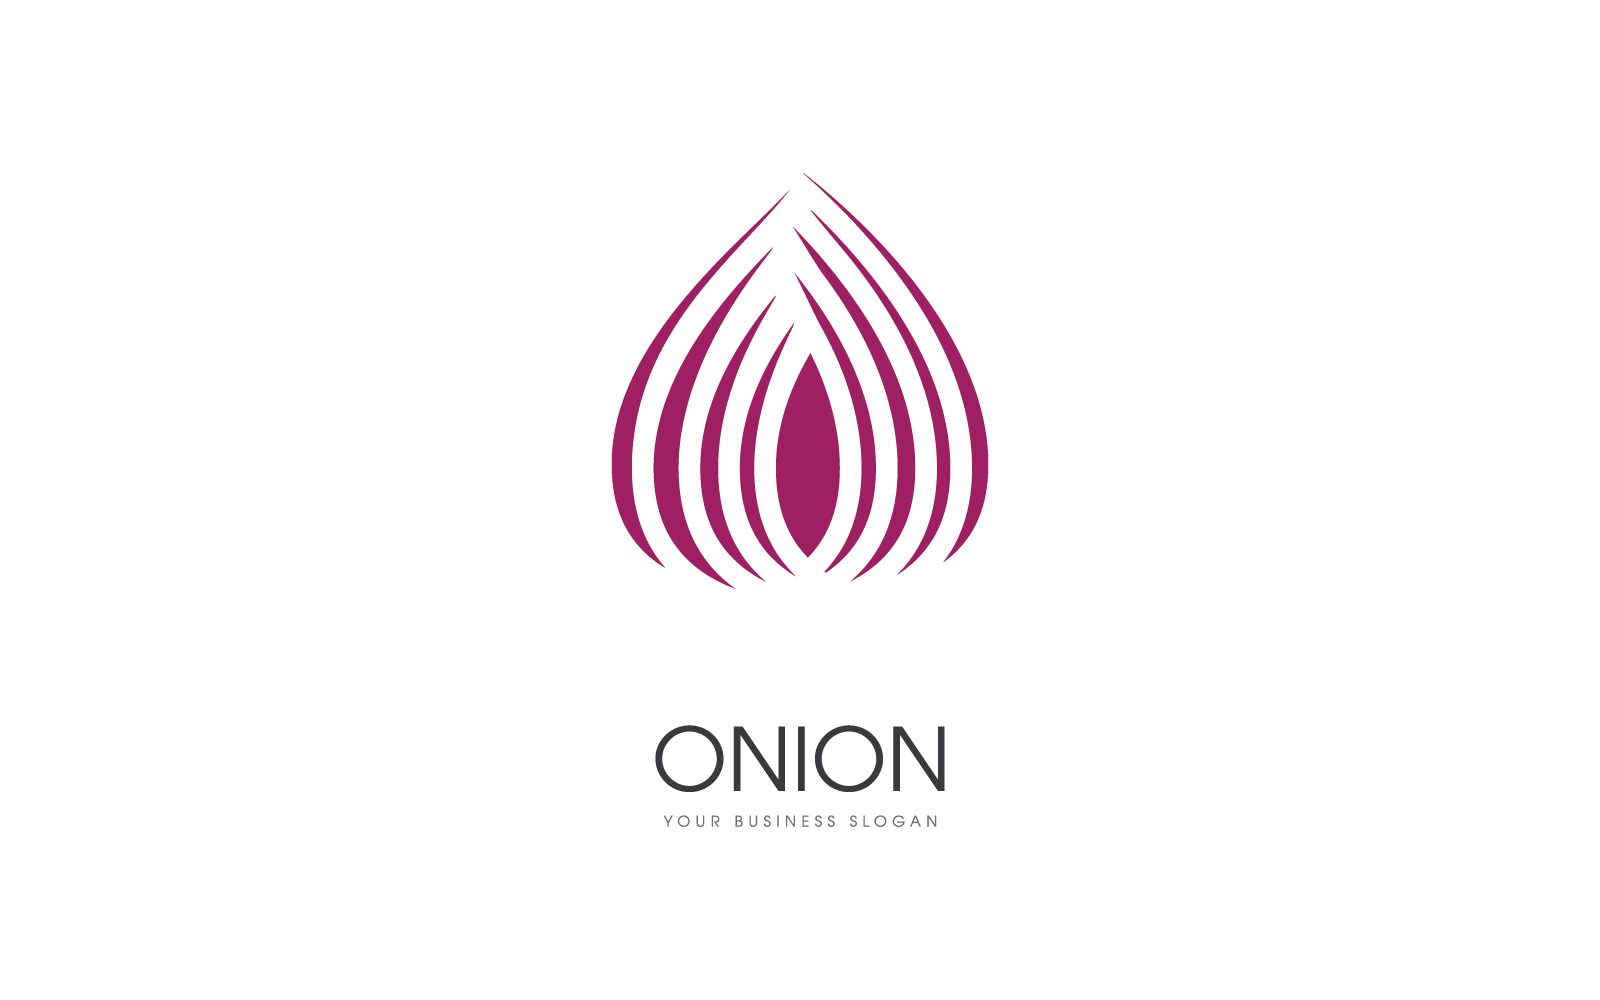 Onion on white background illustration vector design